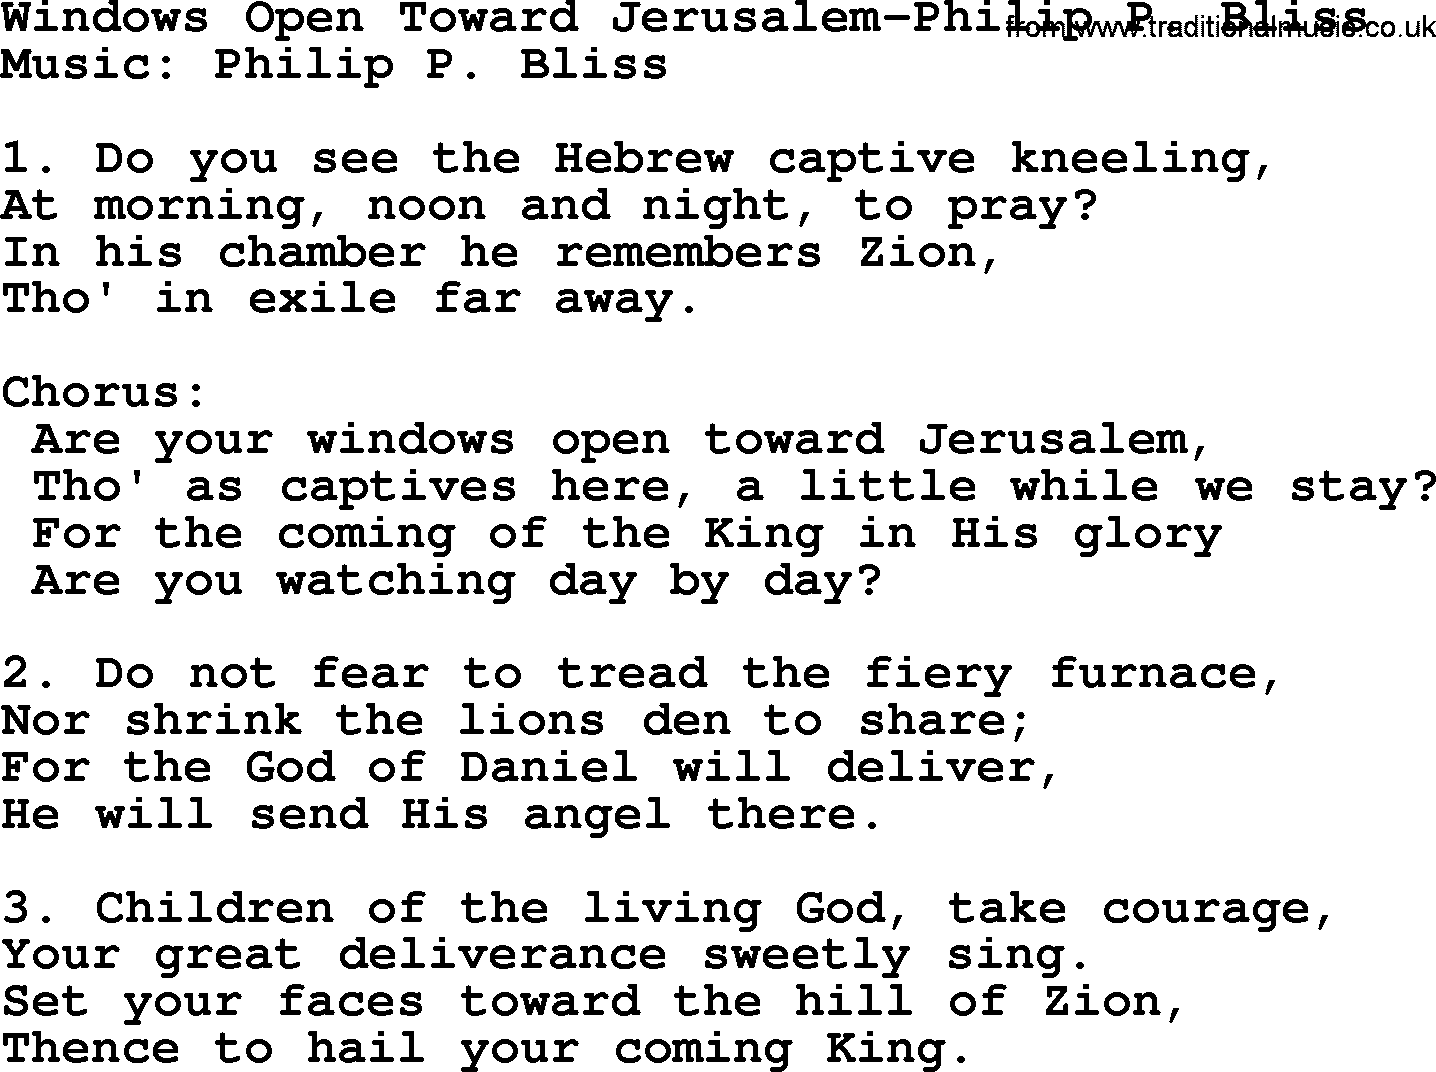 Philip Bliss Song: Windows Open Toward Jerusalems, lyrics